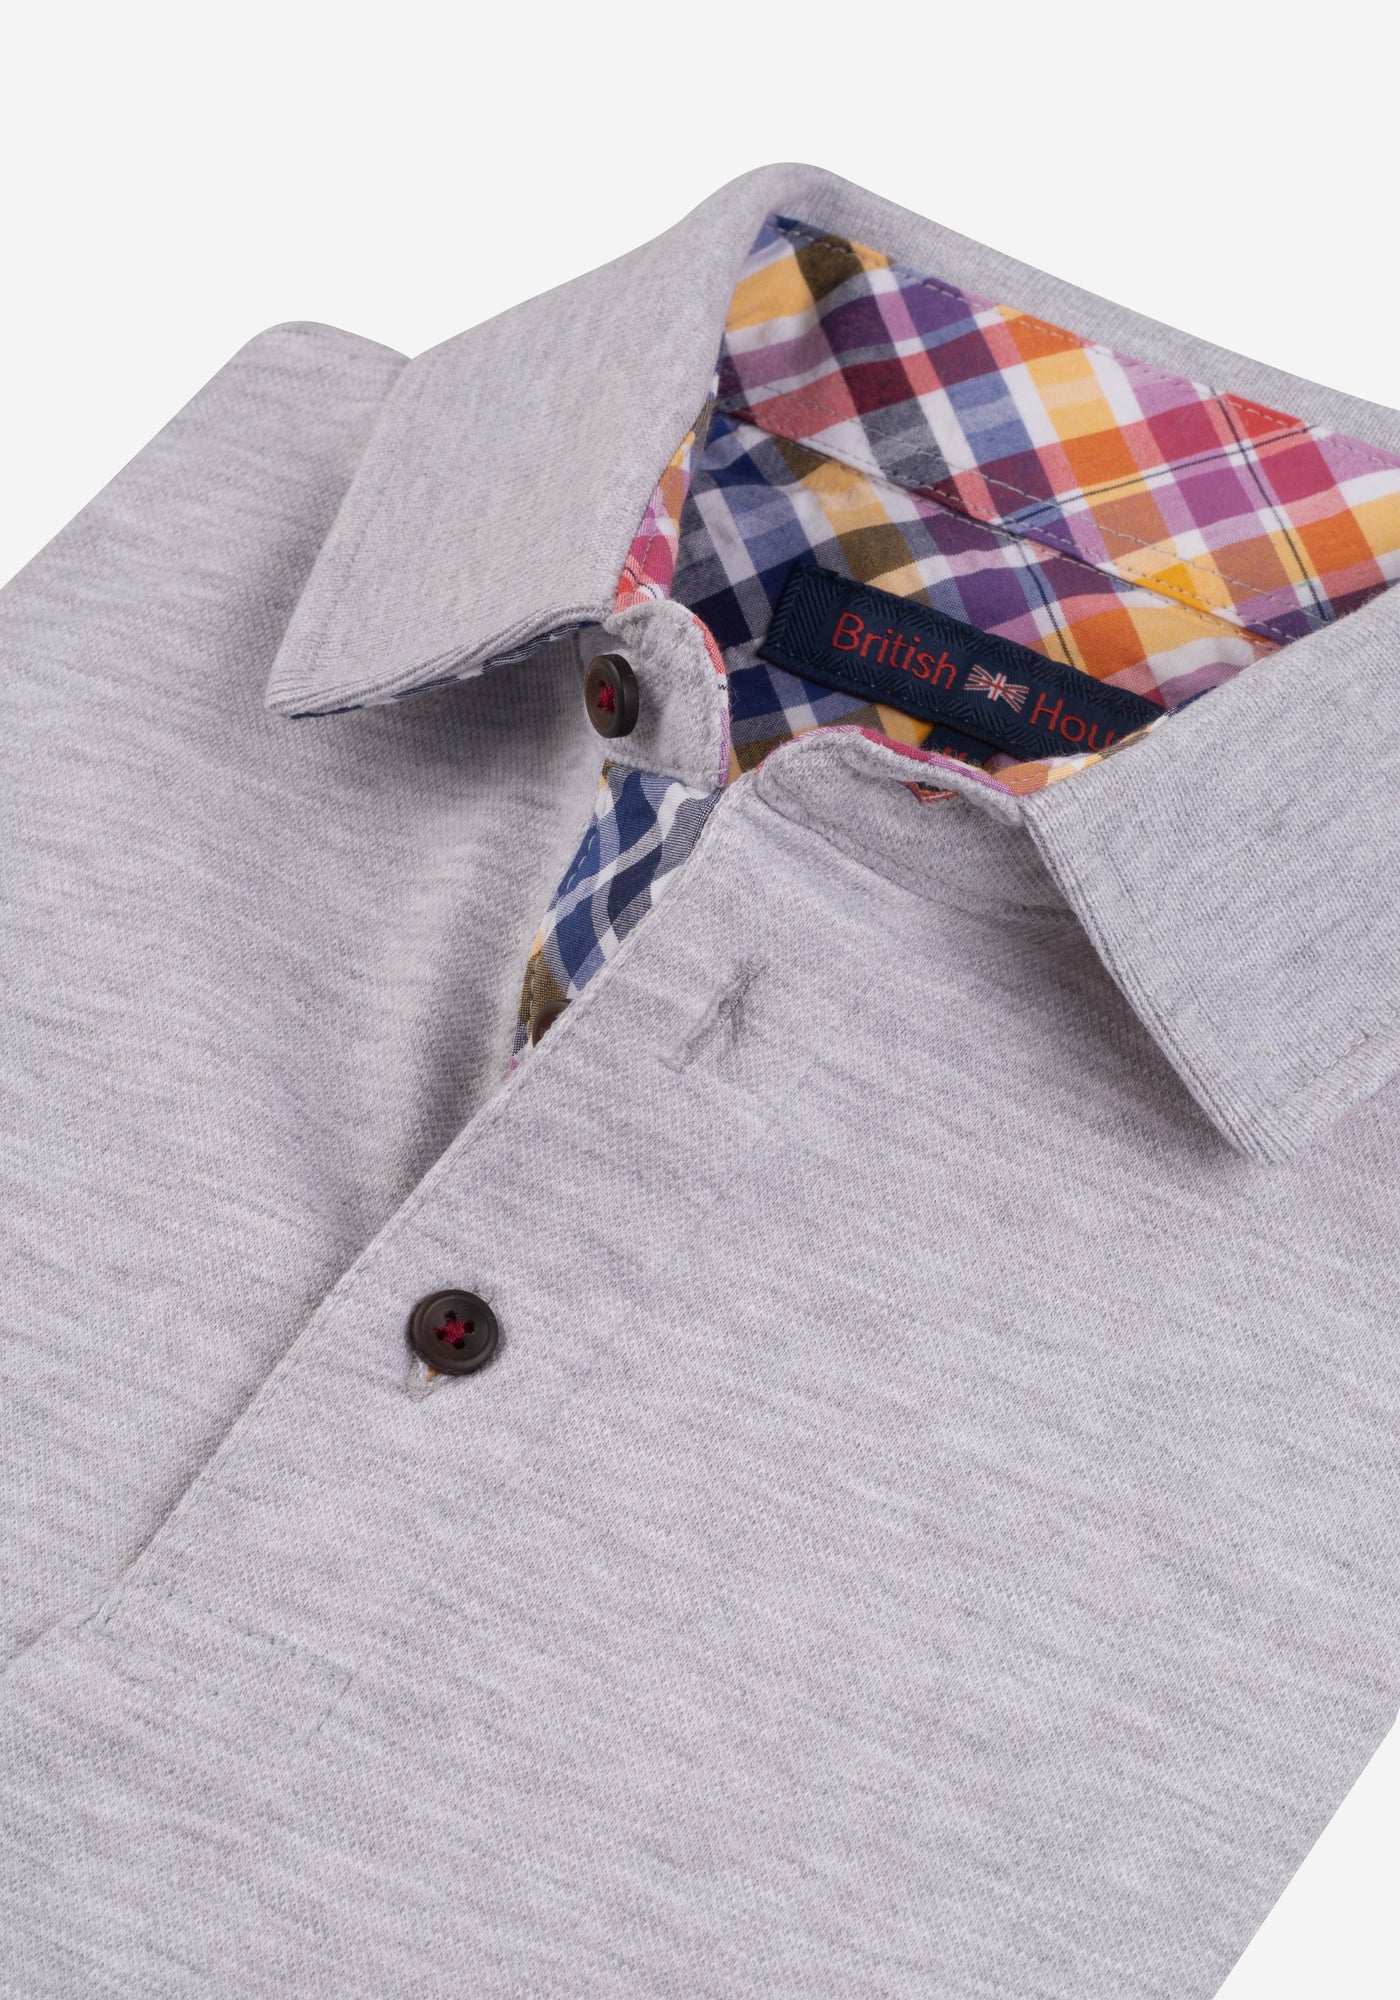 Metallic Grey Cotton Polo Shirt